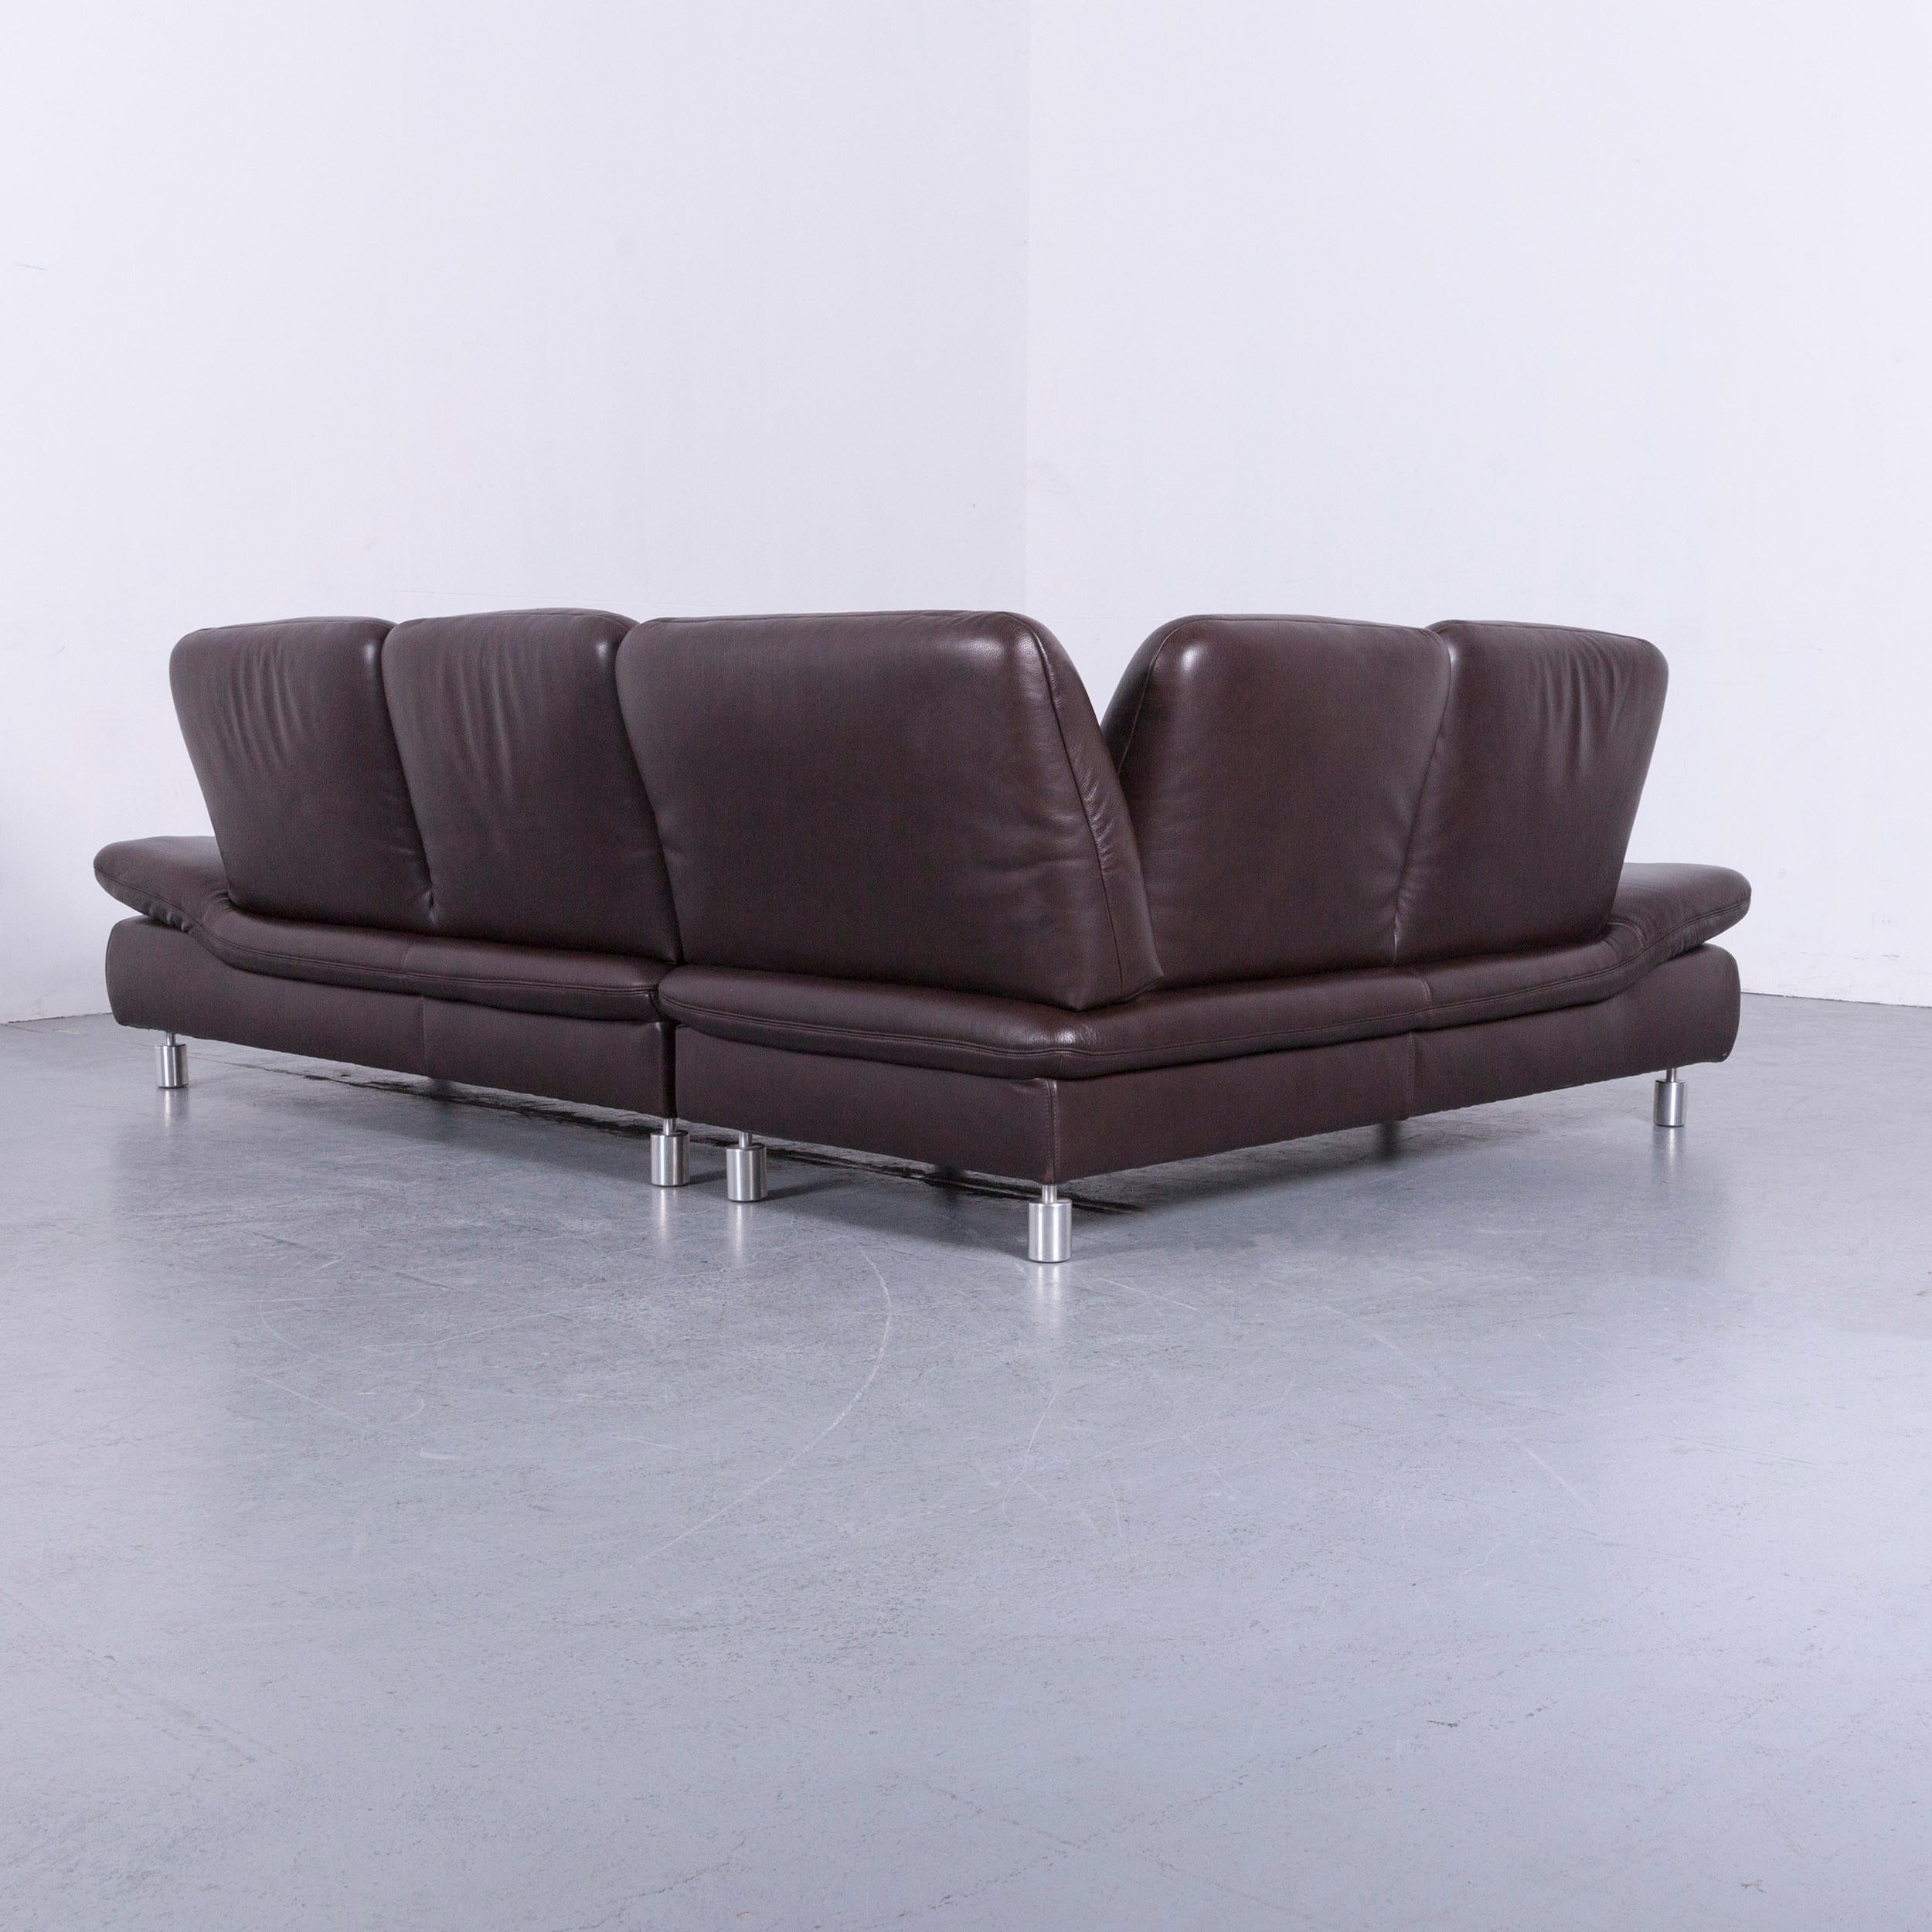 Koinor Rivoli Designer Leather Corner Sofa in Brown with Functions 4